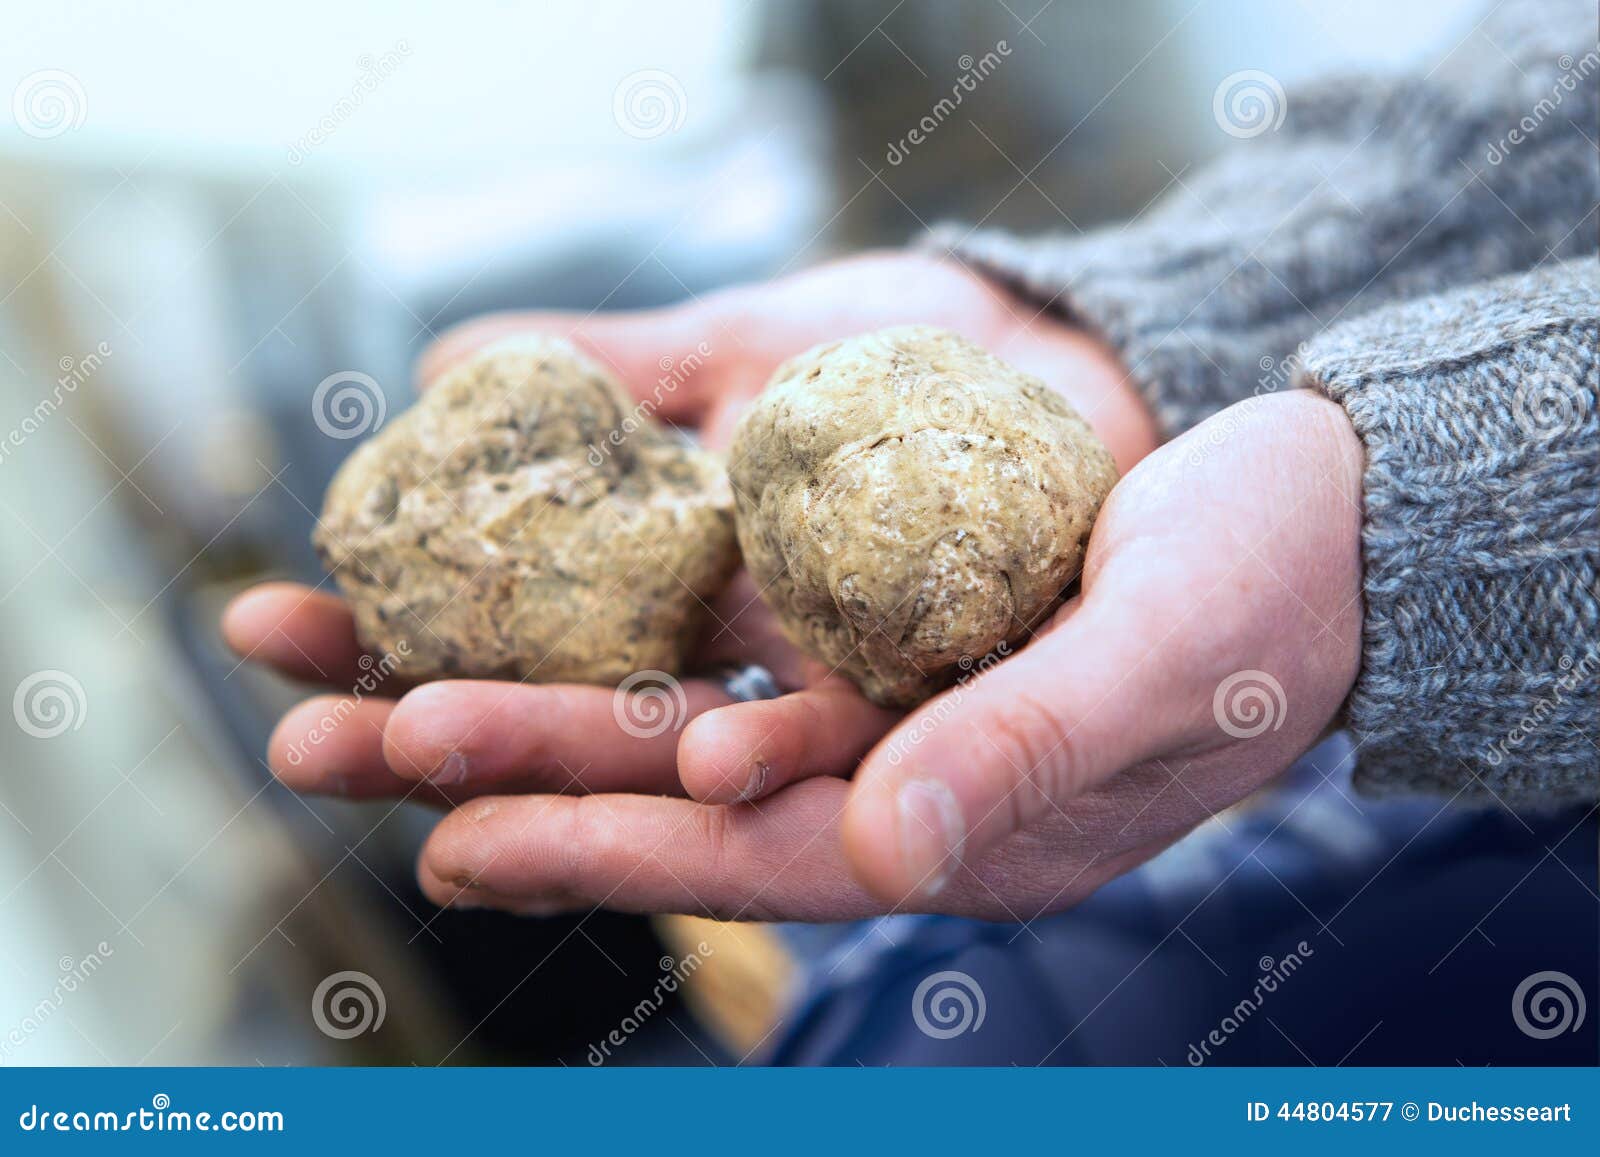 big white truffles on the hand